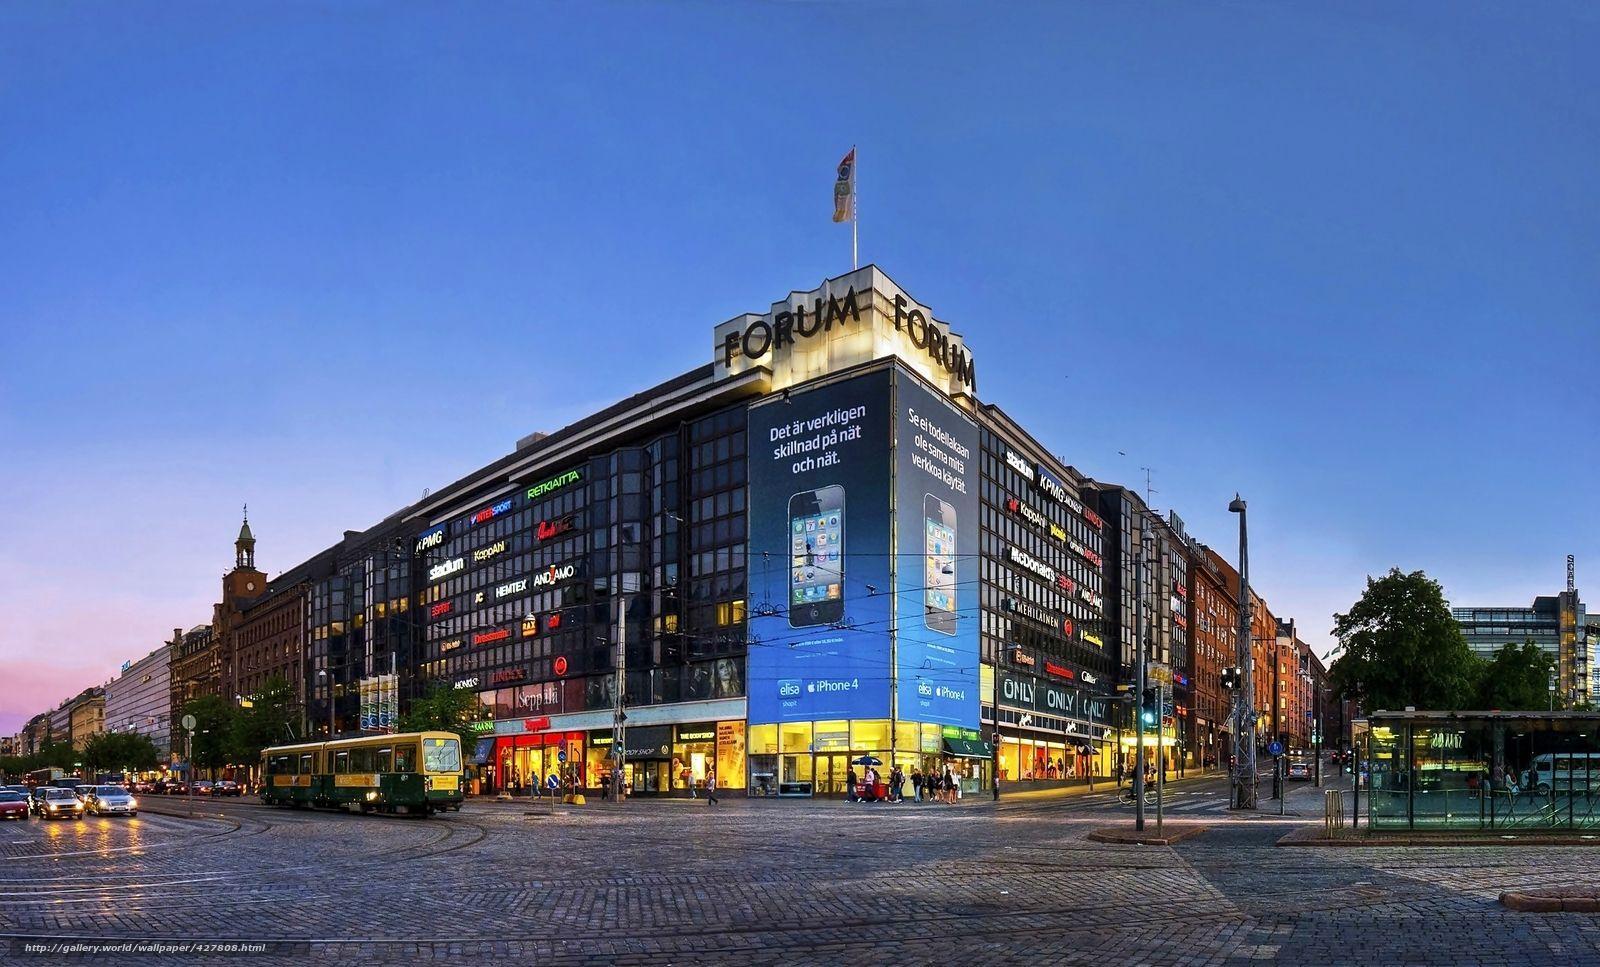 Download wallpaper city, helsinki, finland, forum shopping mall